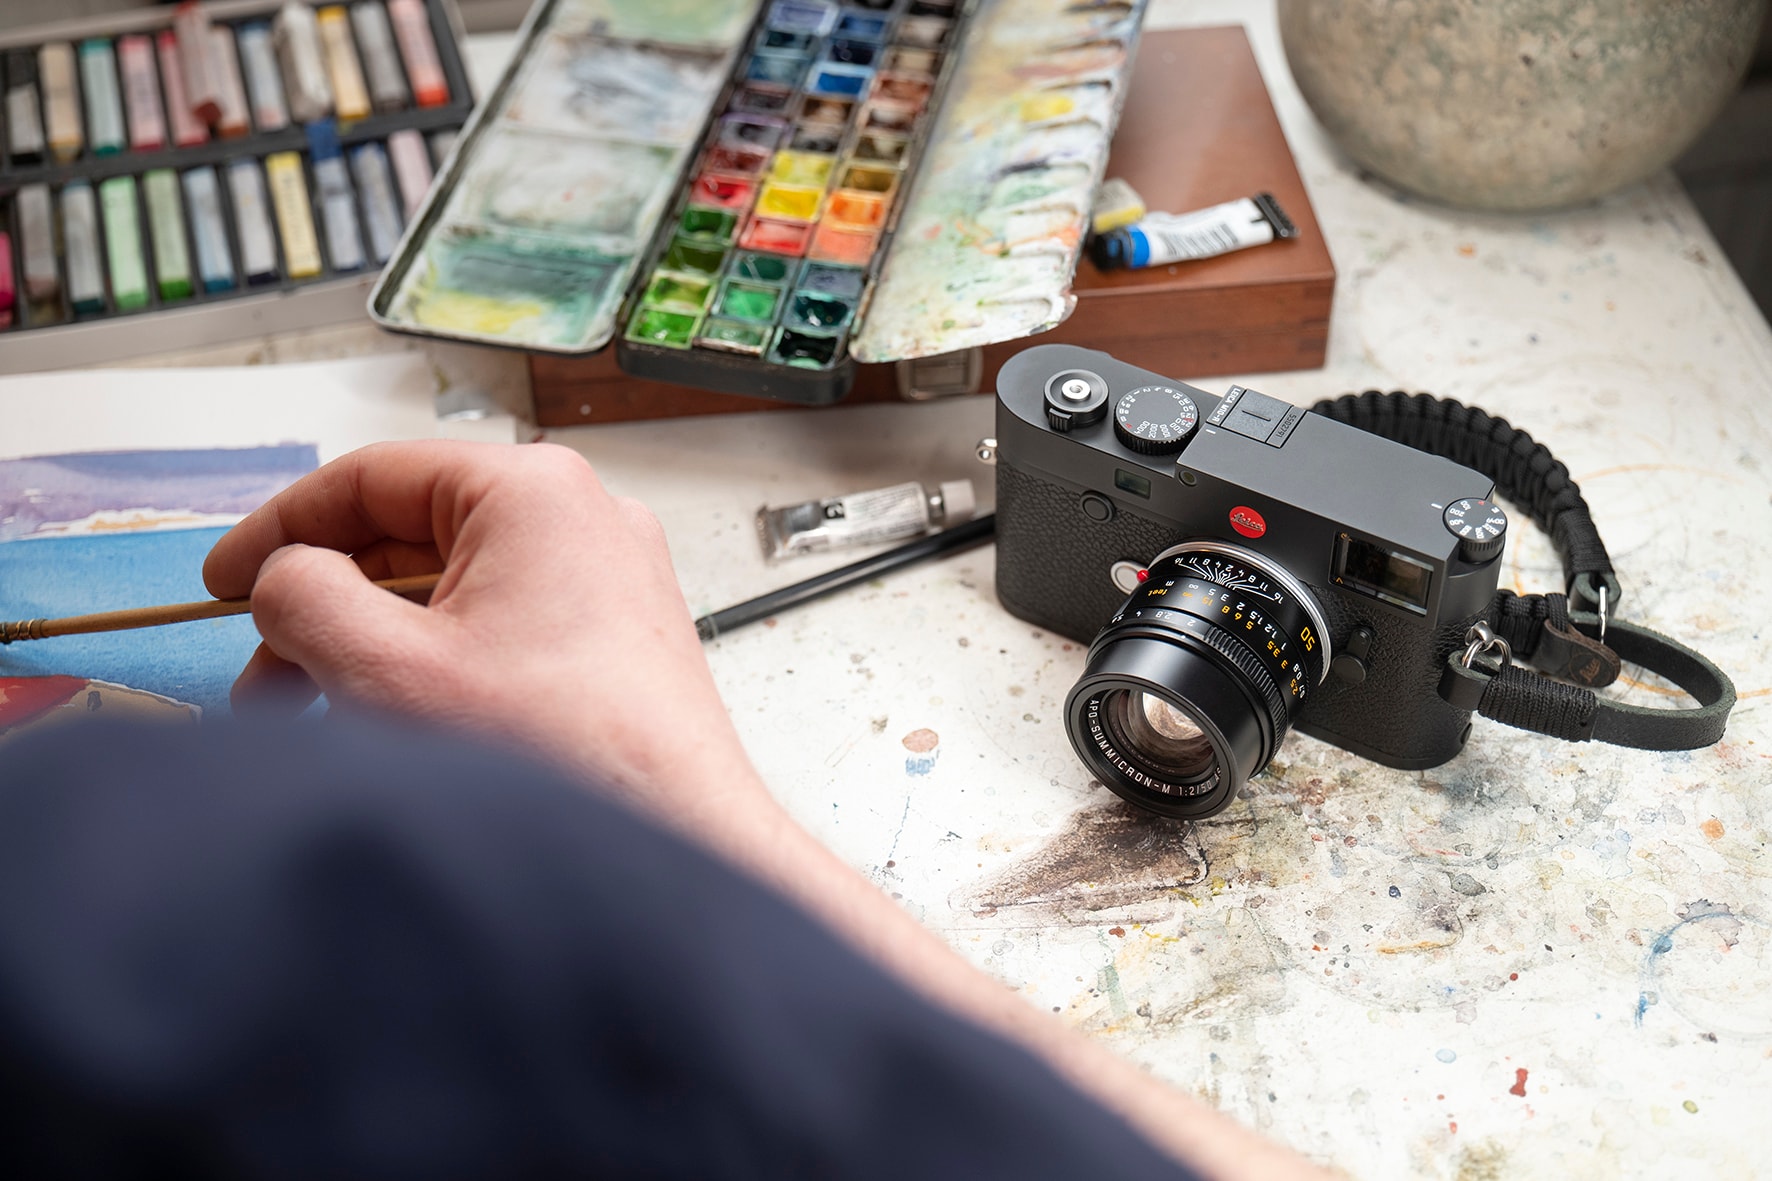 Leica 相機發表 M10 家族新成員 M10-R